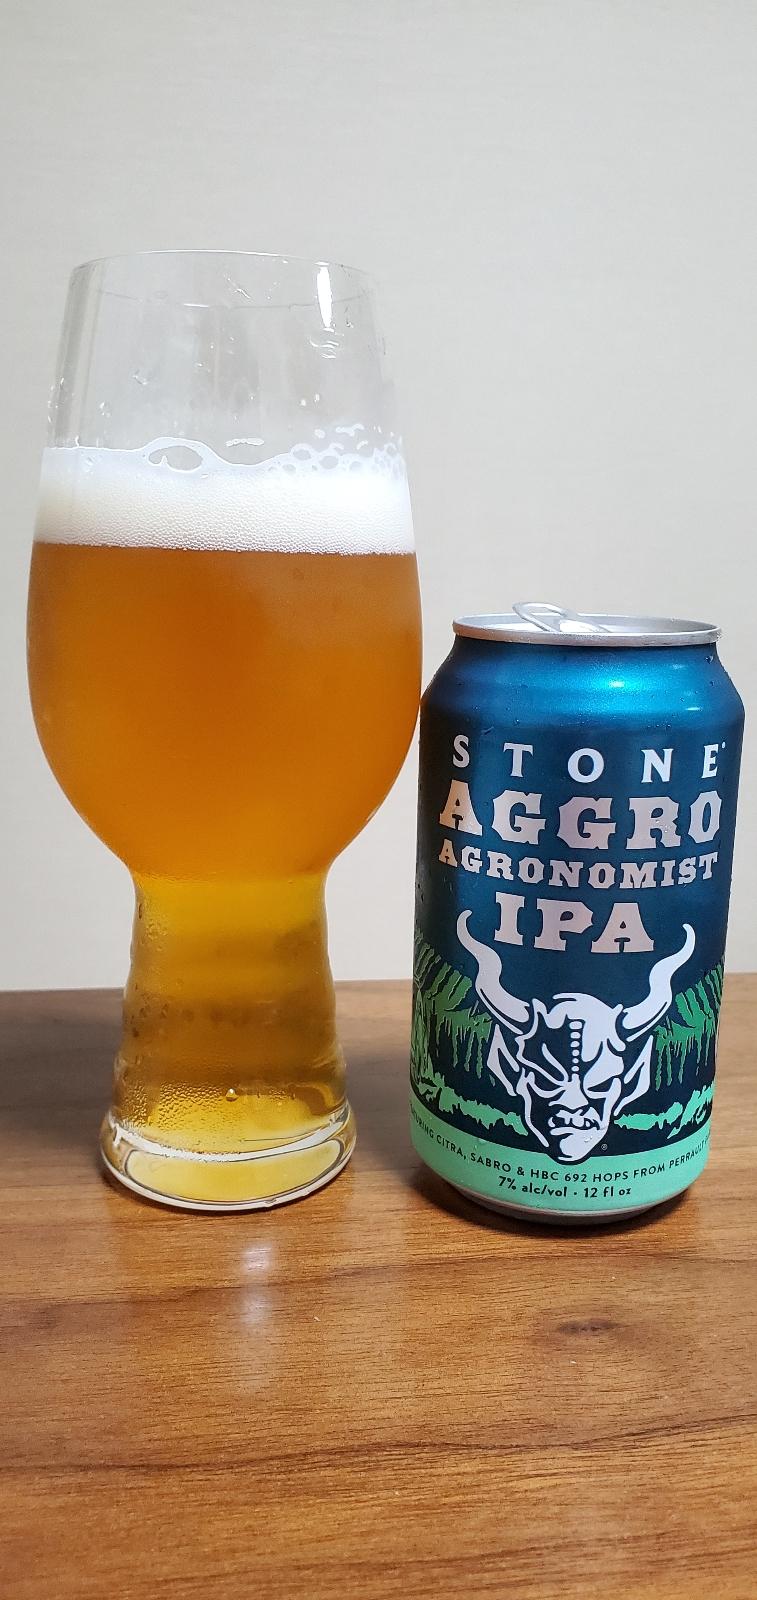 Aggro Agronomist IPA